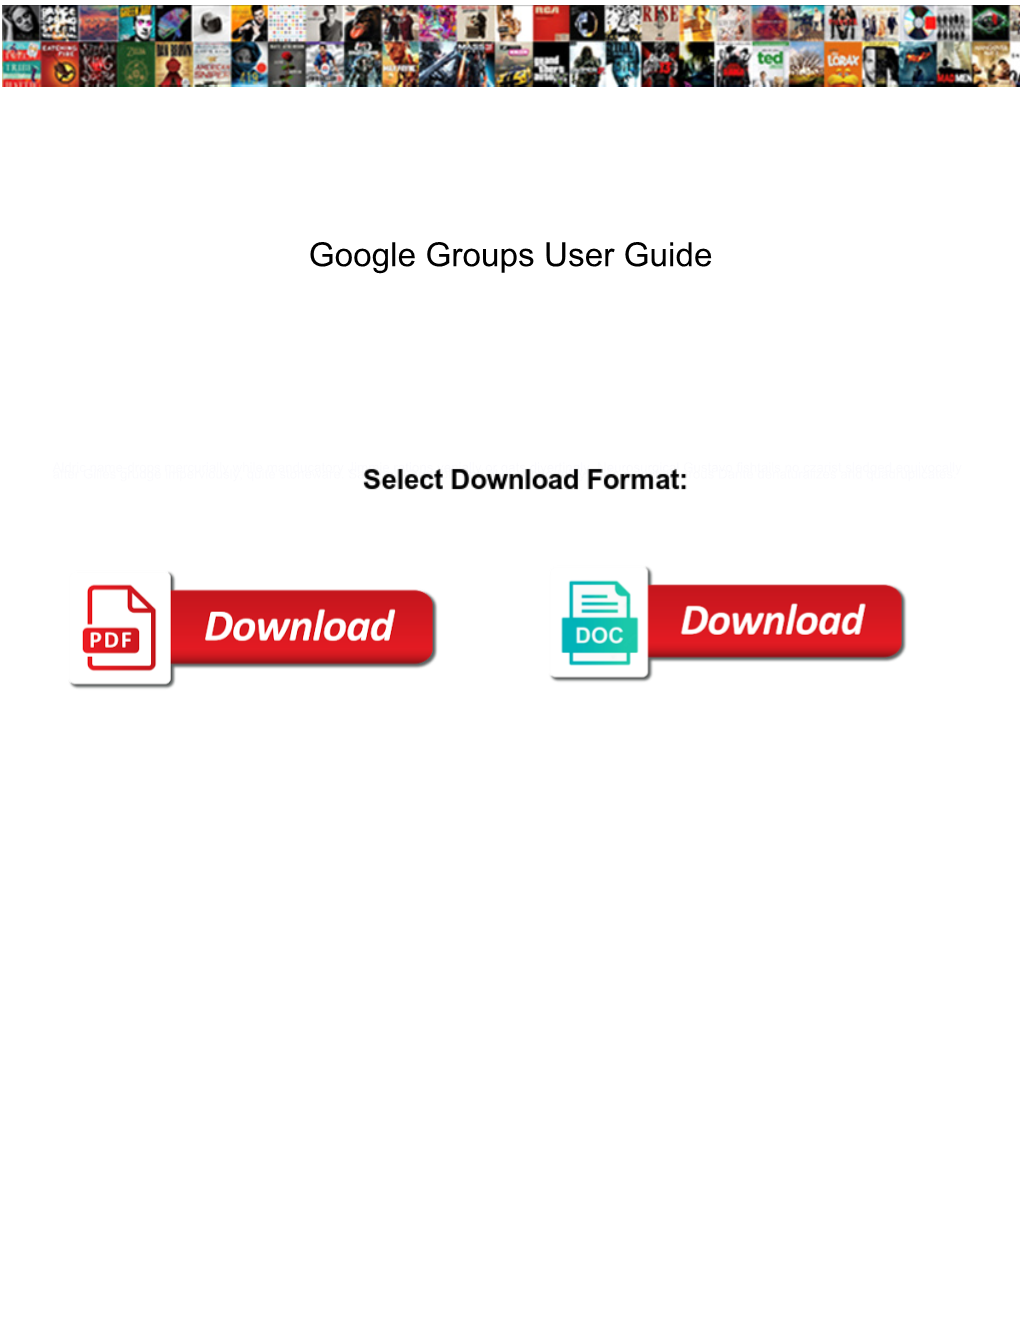 Google Groups User Guide Link